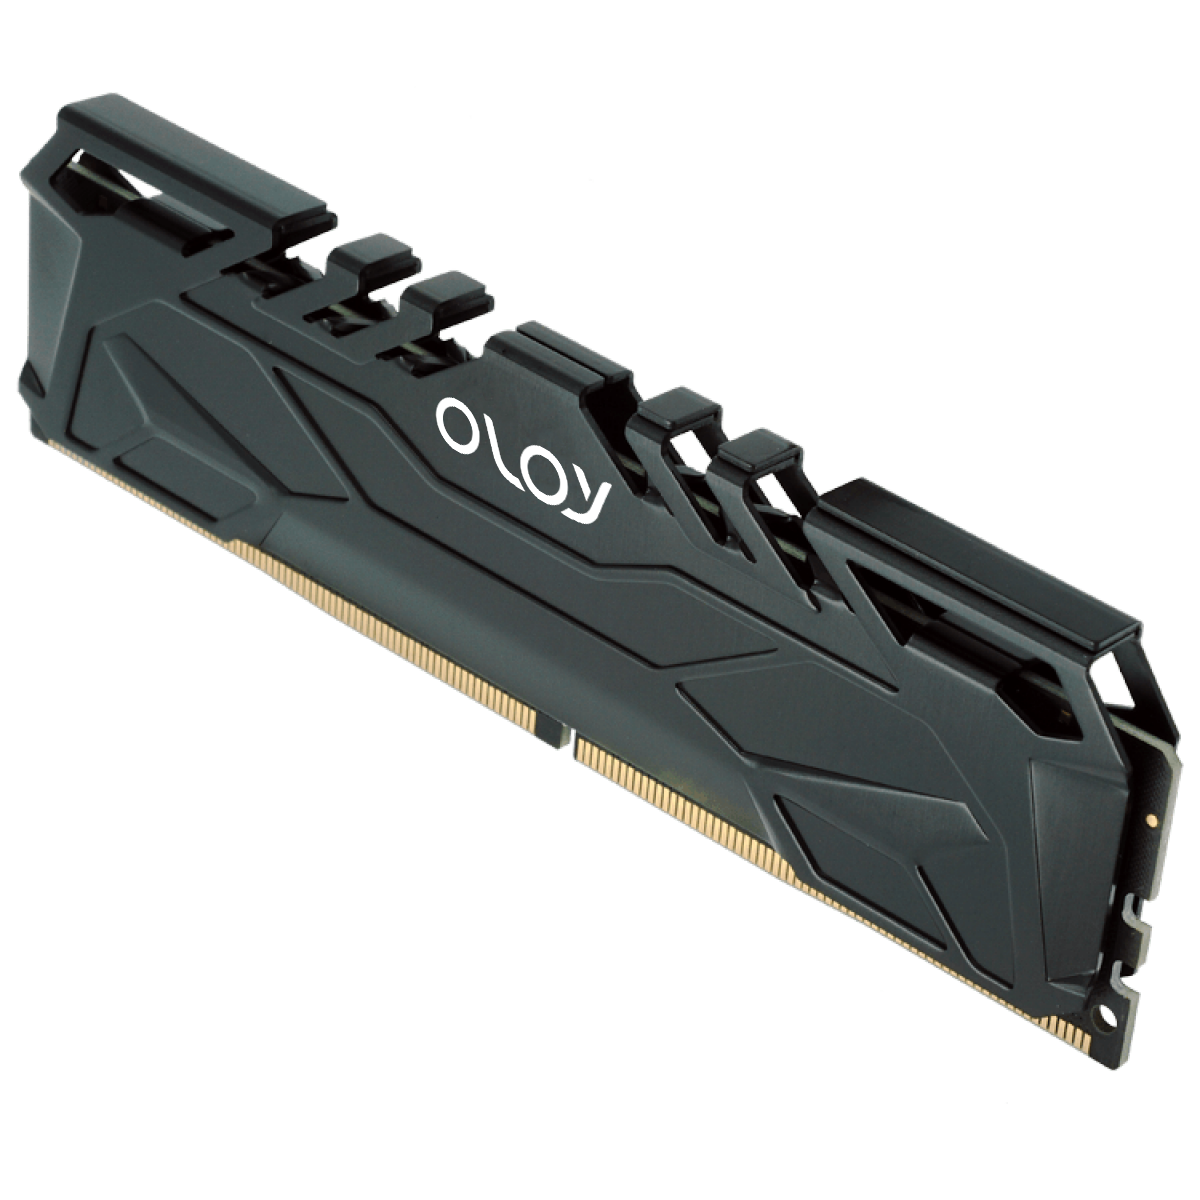 Memória DDR4 OLOy Owl Black, 8GB, 3200MHZ, MD4U083216BJSA